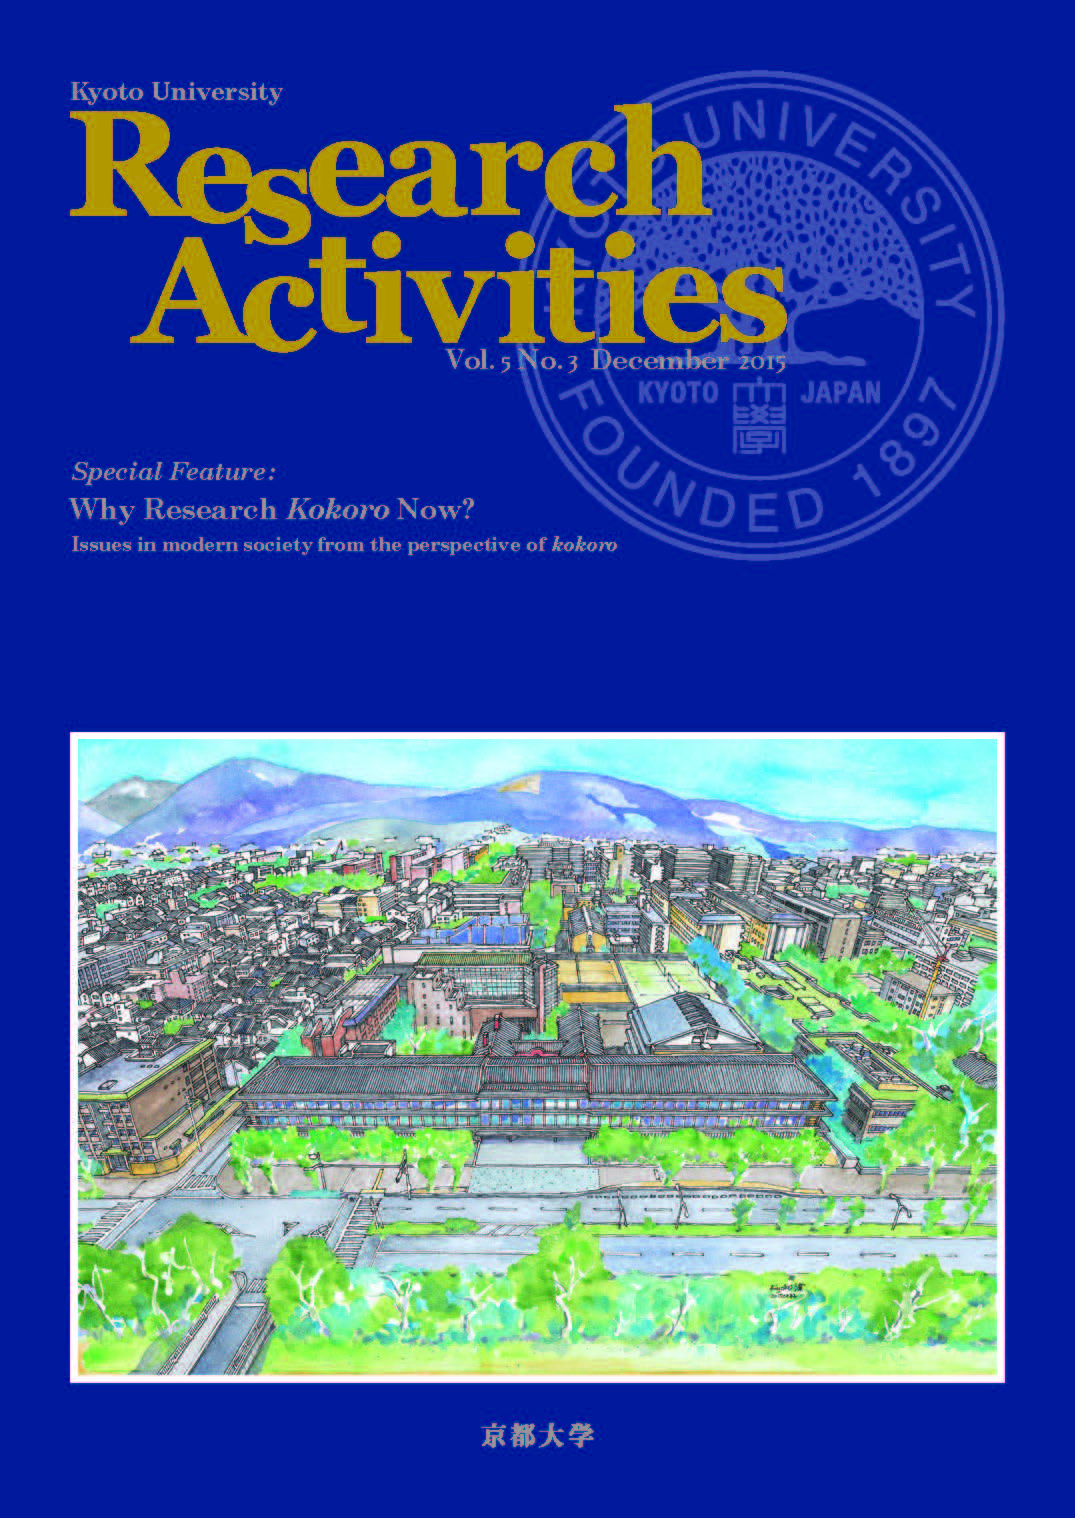 Kyoto University Research Activities Vol.5 No.3 December 2015